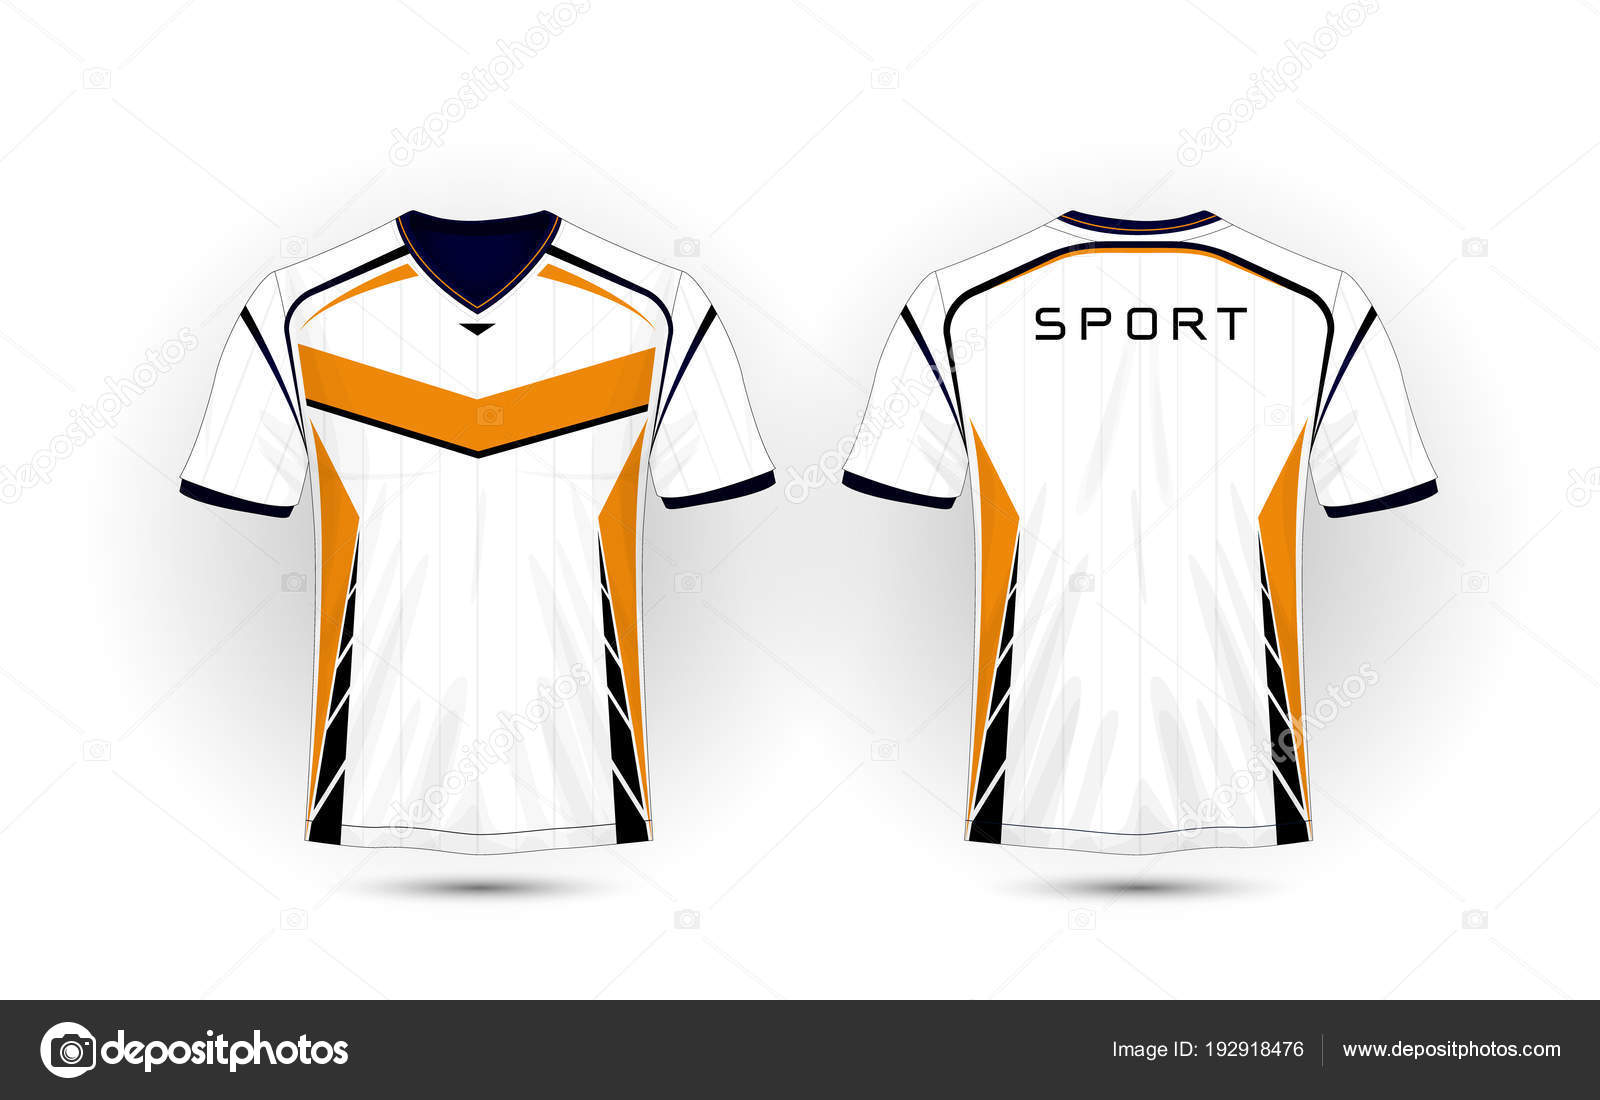 white and orange jersey